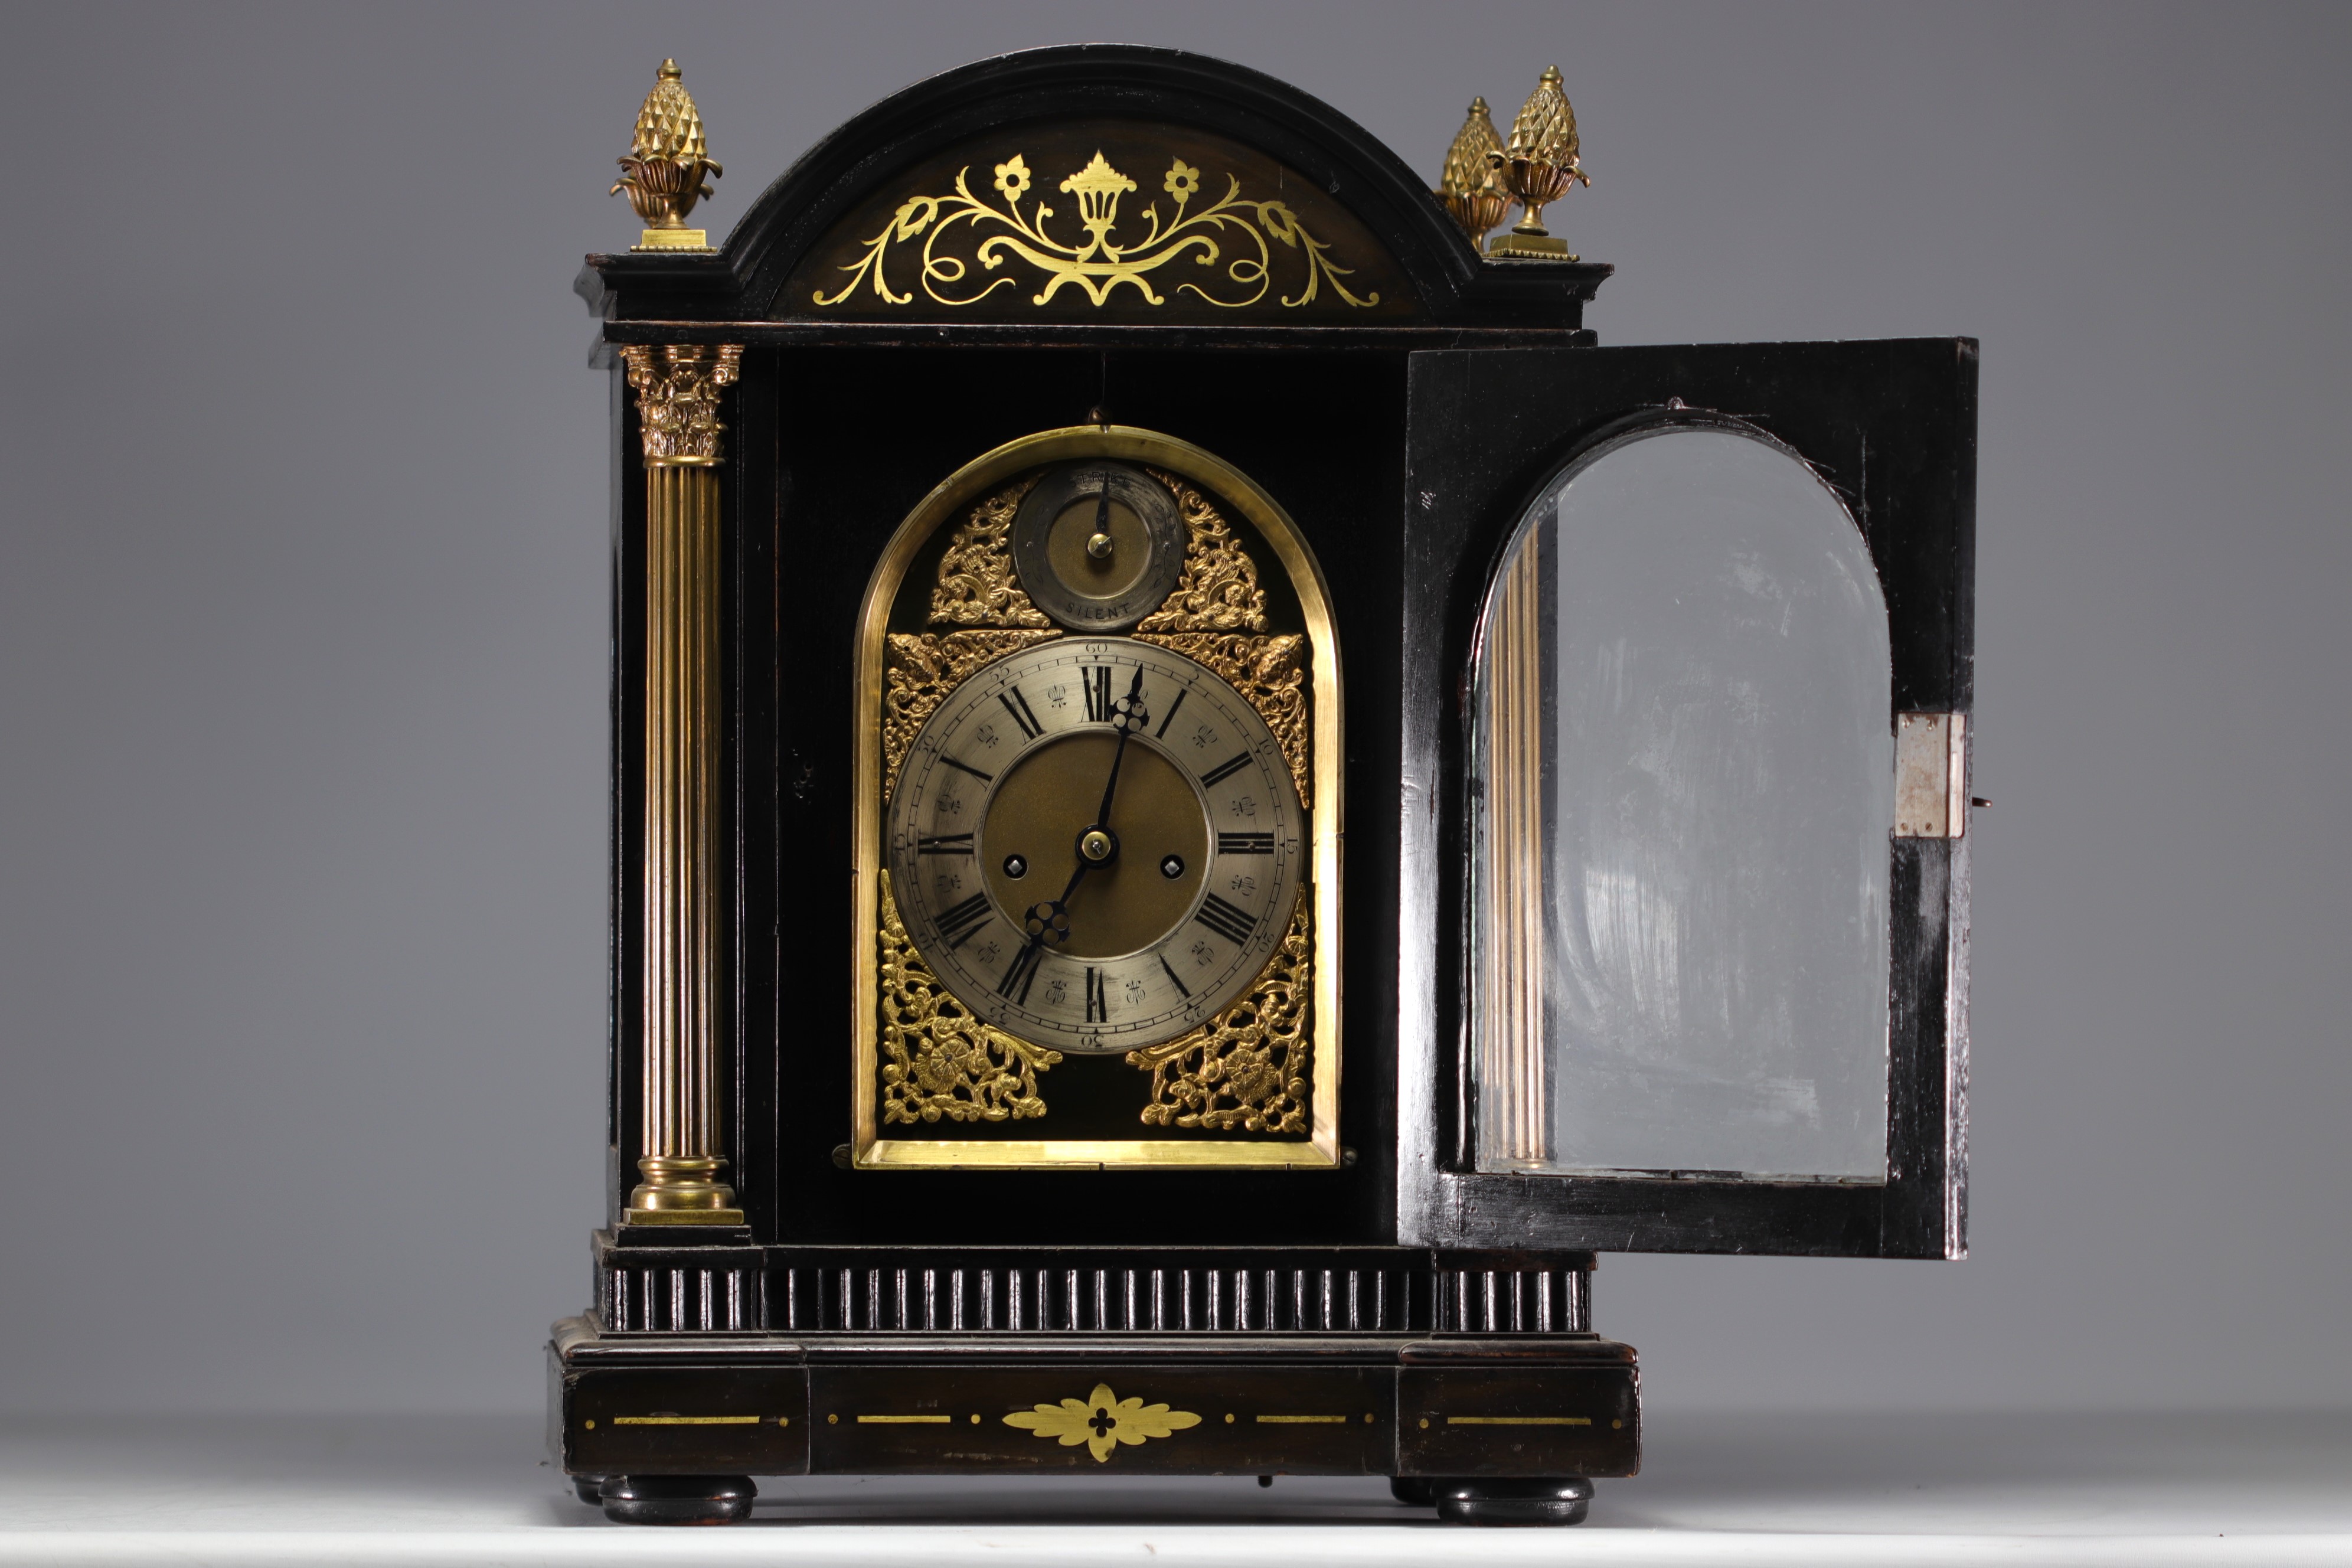 Mantel clock with striking mechanism in veneered wood, bronze and brass, 18th century. - Image 3 of 4